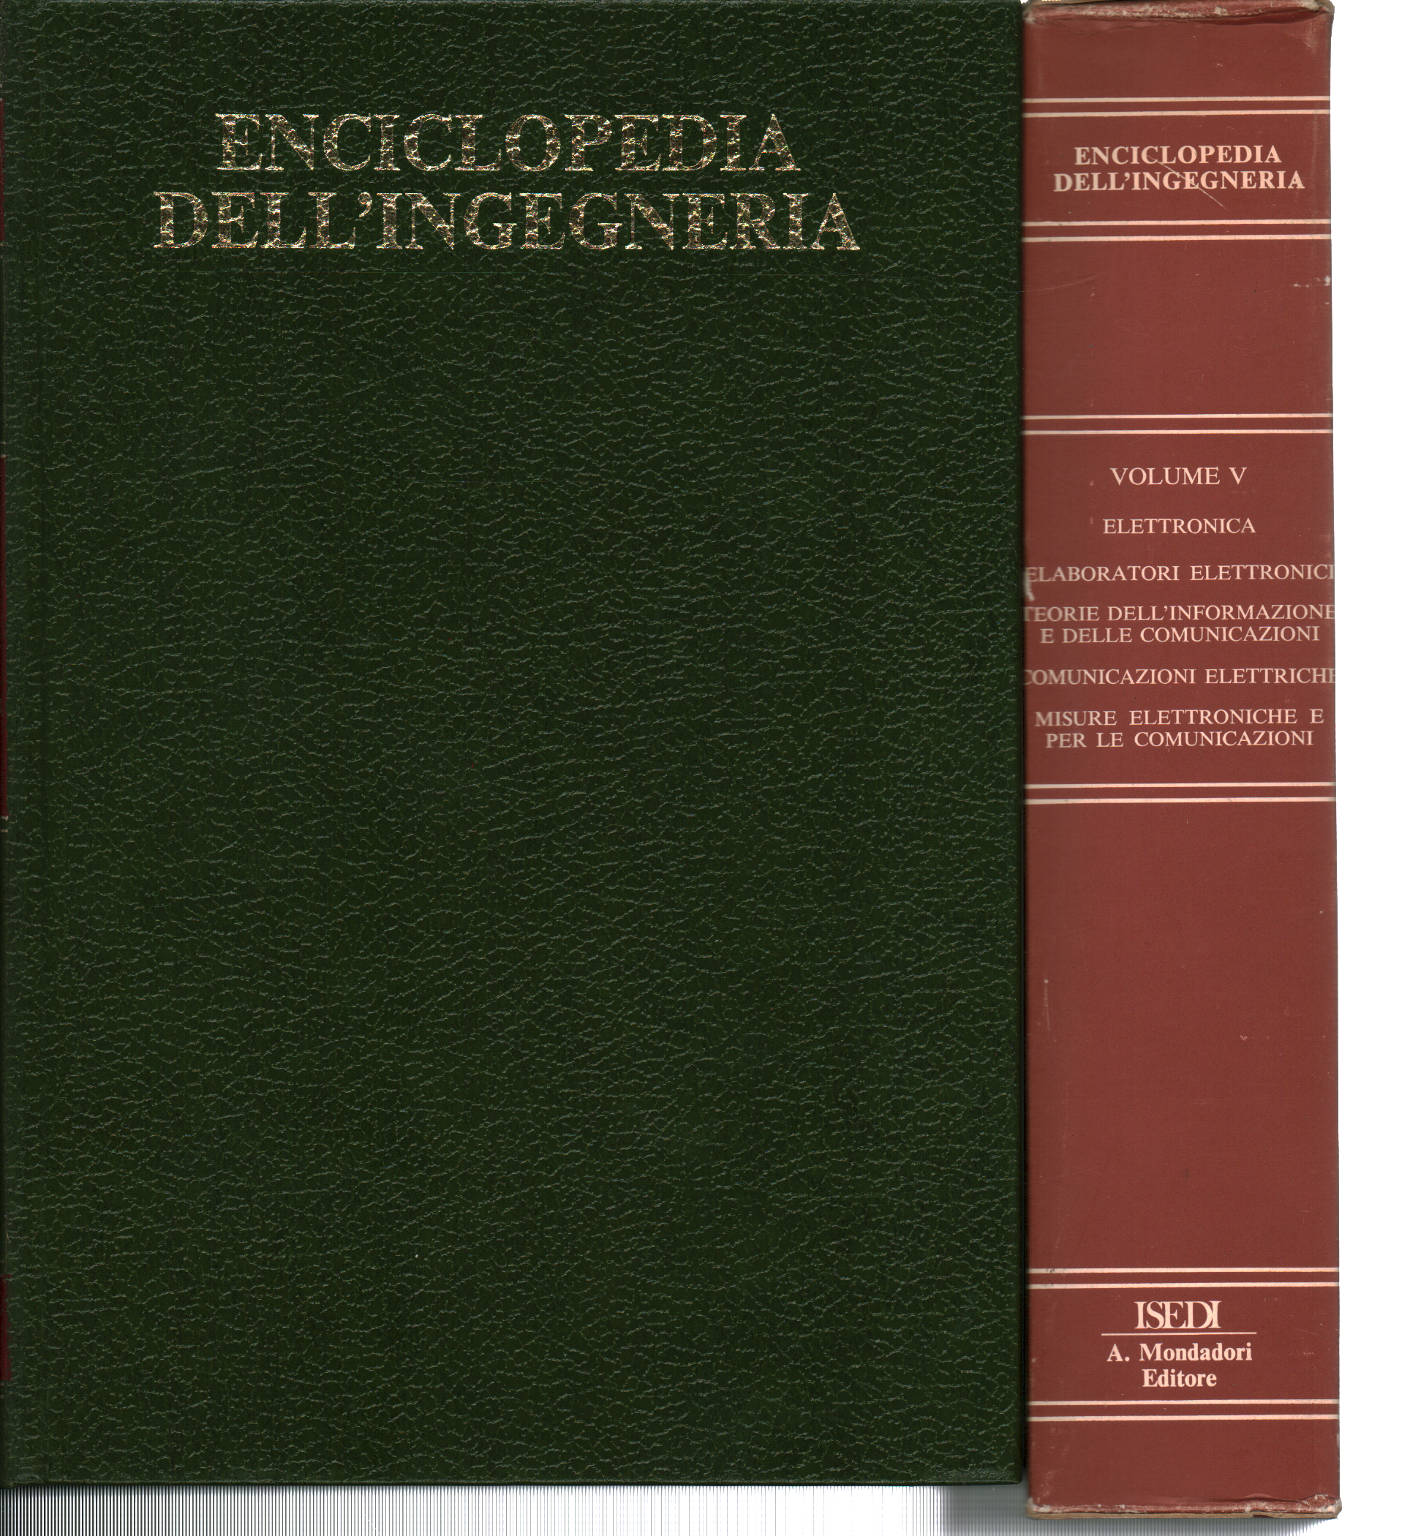 Enciclopedia dell'ingegneria. Volume V, Mario Lenti